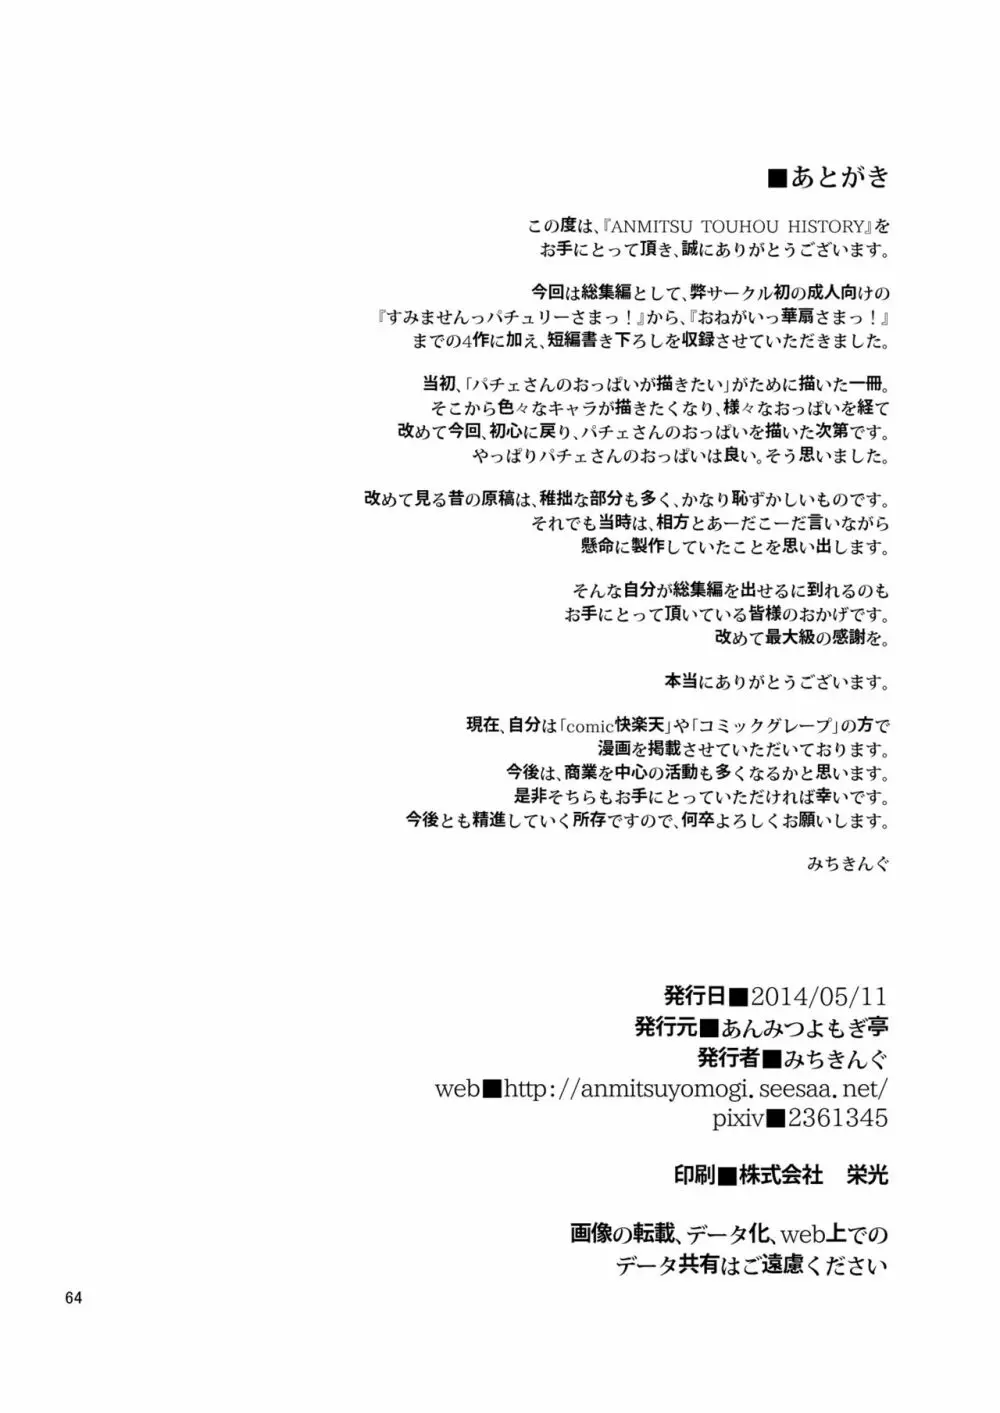 ANMITSU TOUHOU HISTORY 64ページ